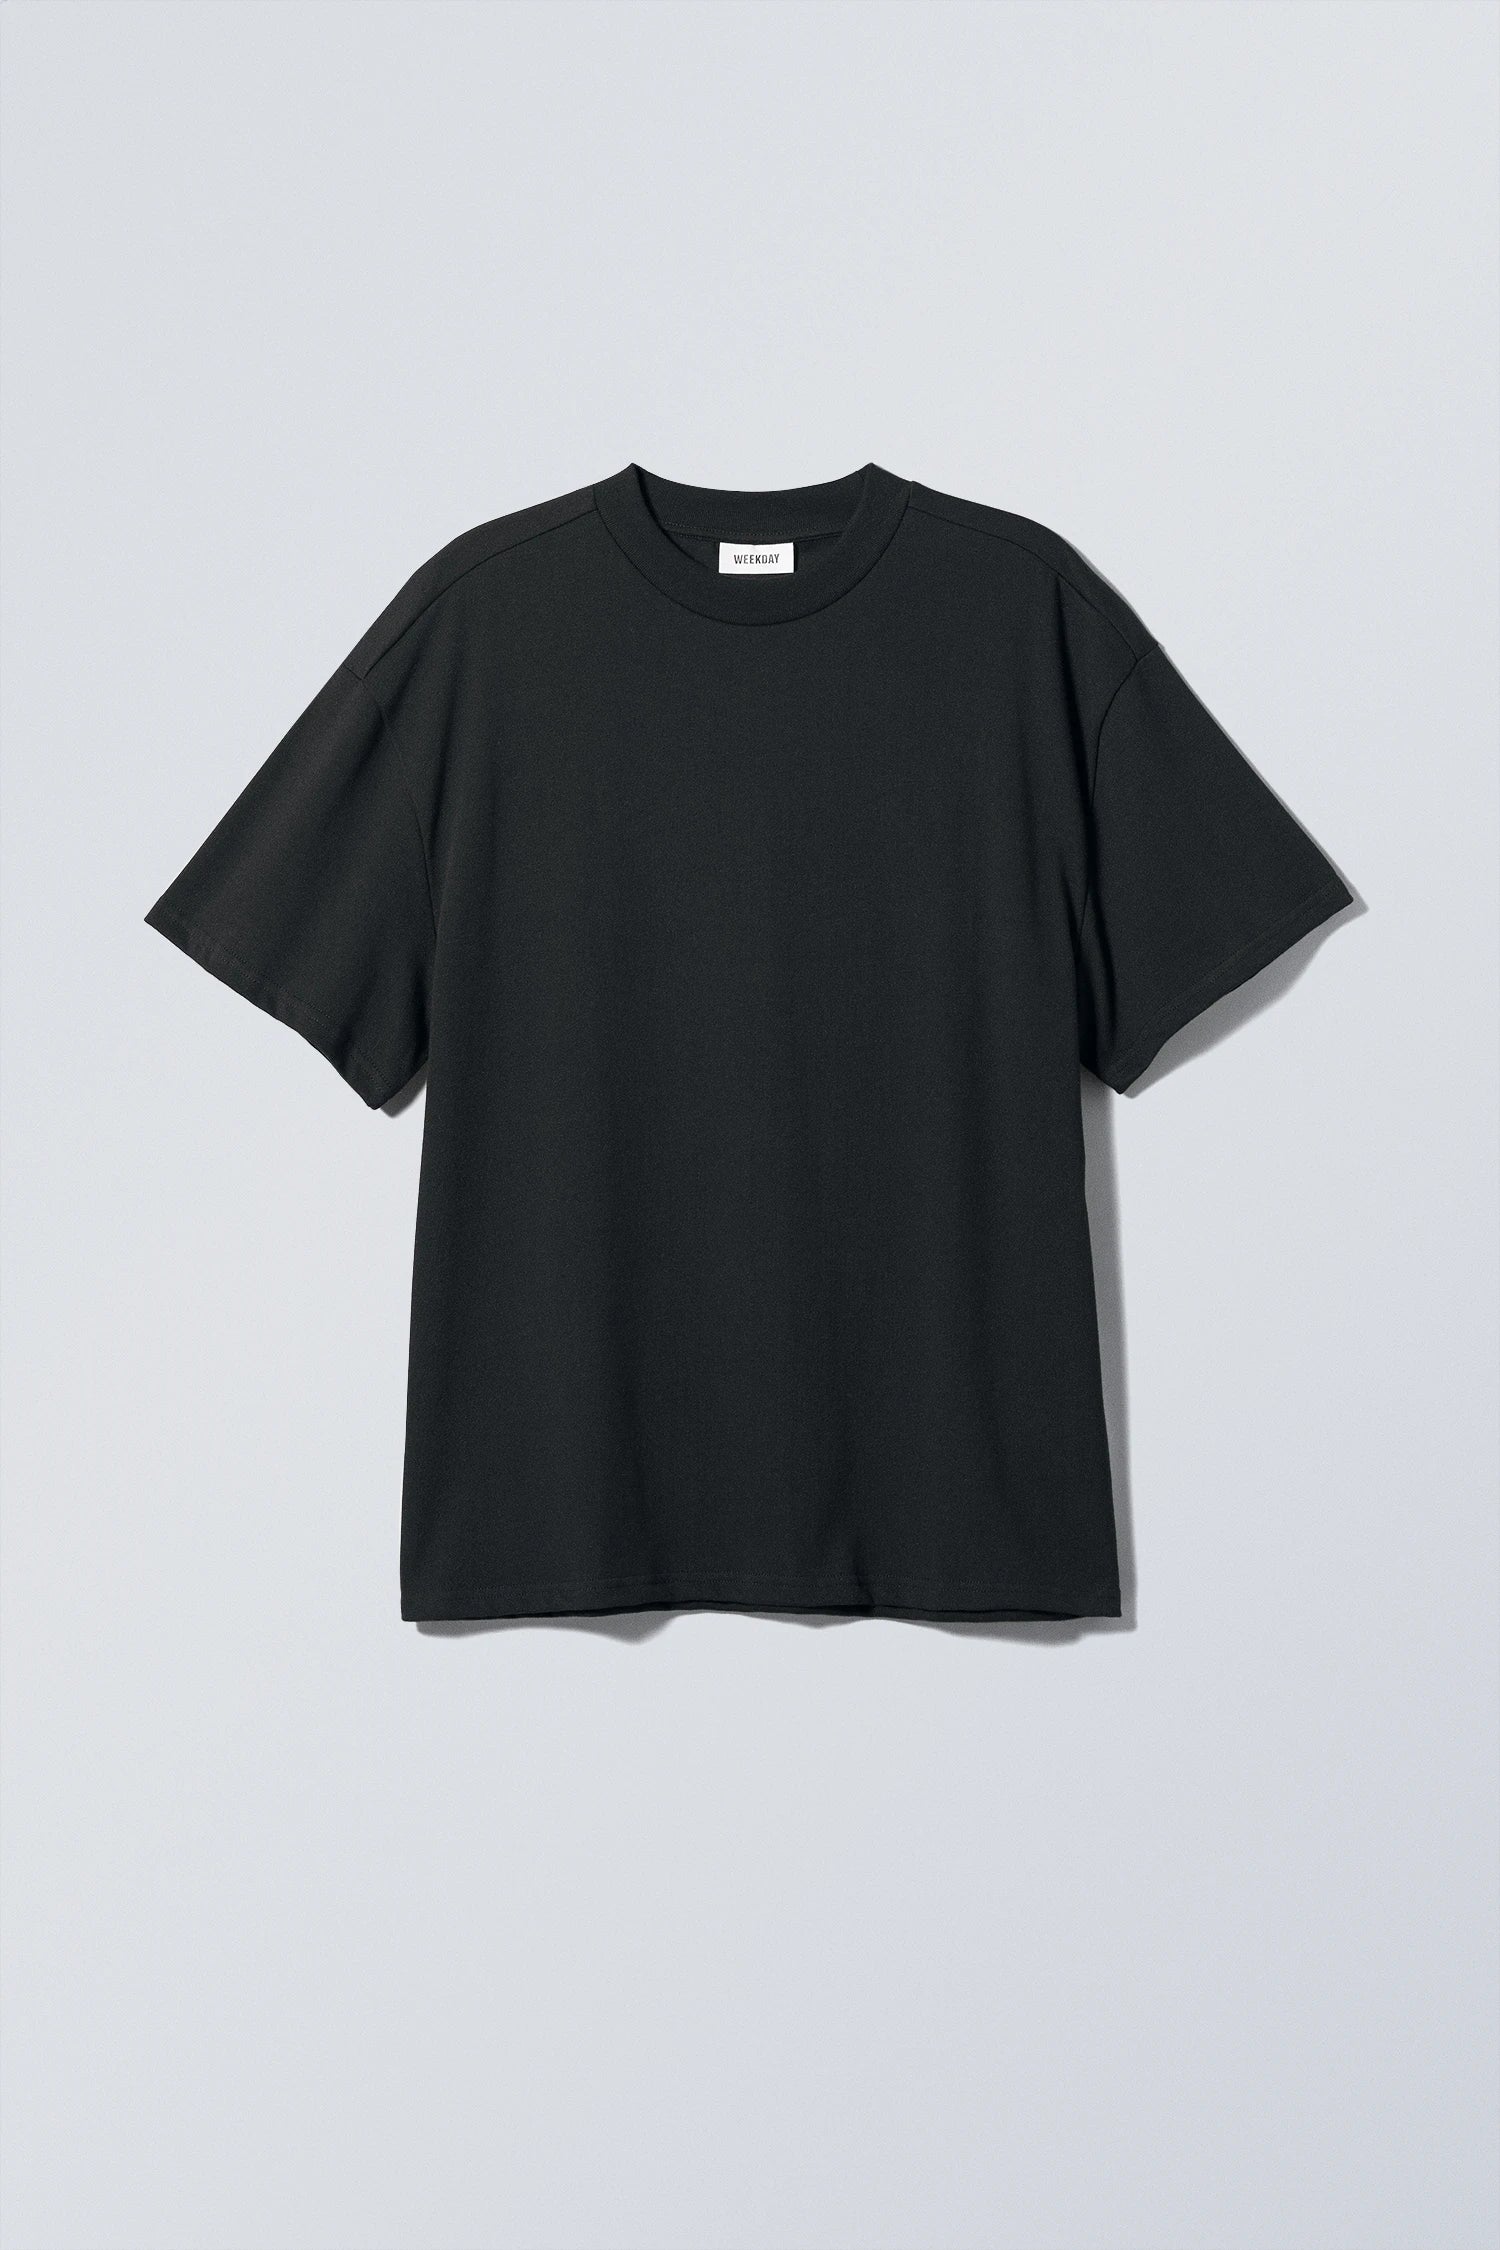 Great T-Shirt Black